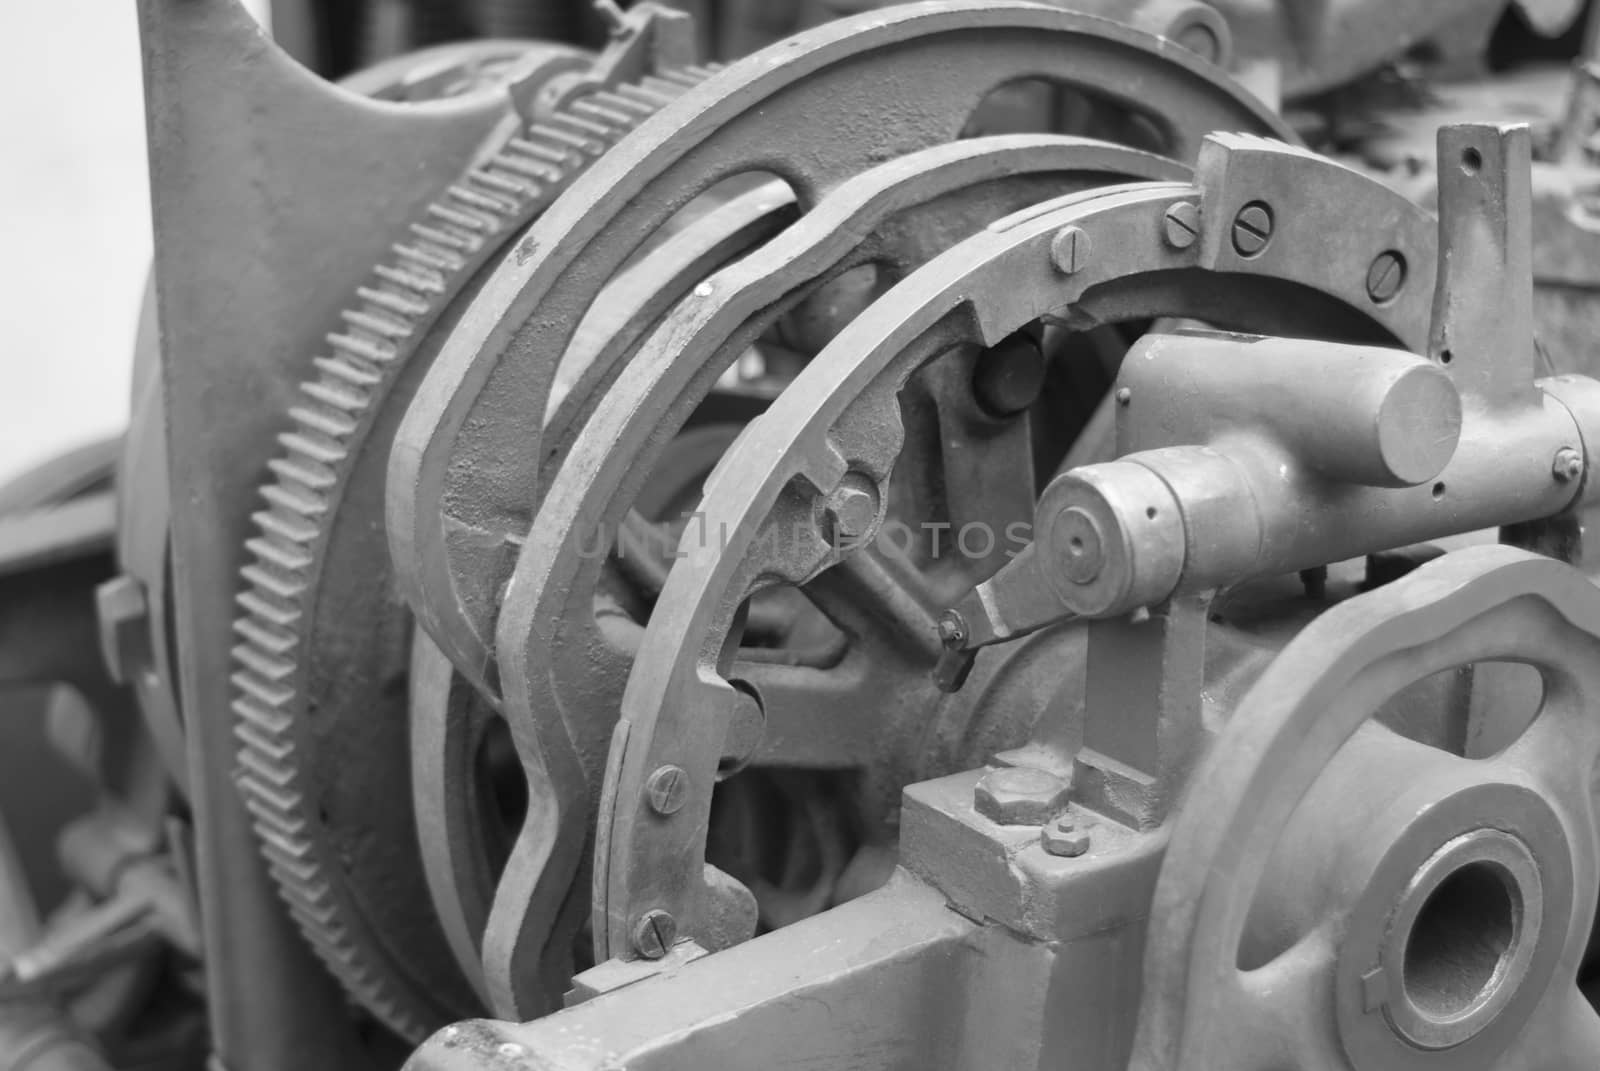 Old rusty gears printing press by Morfey713